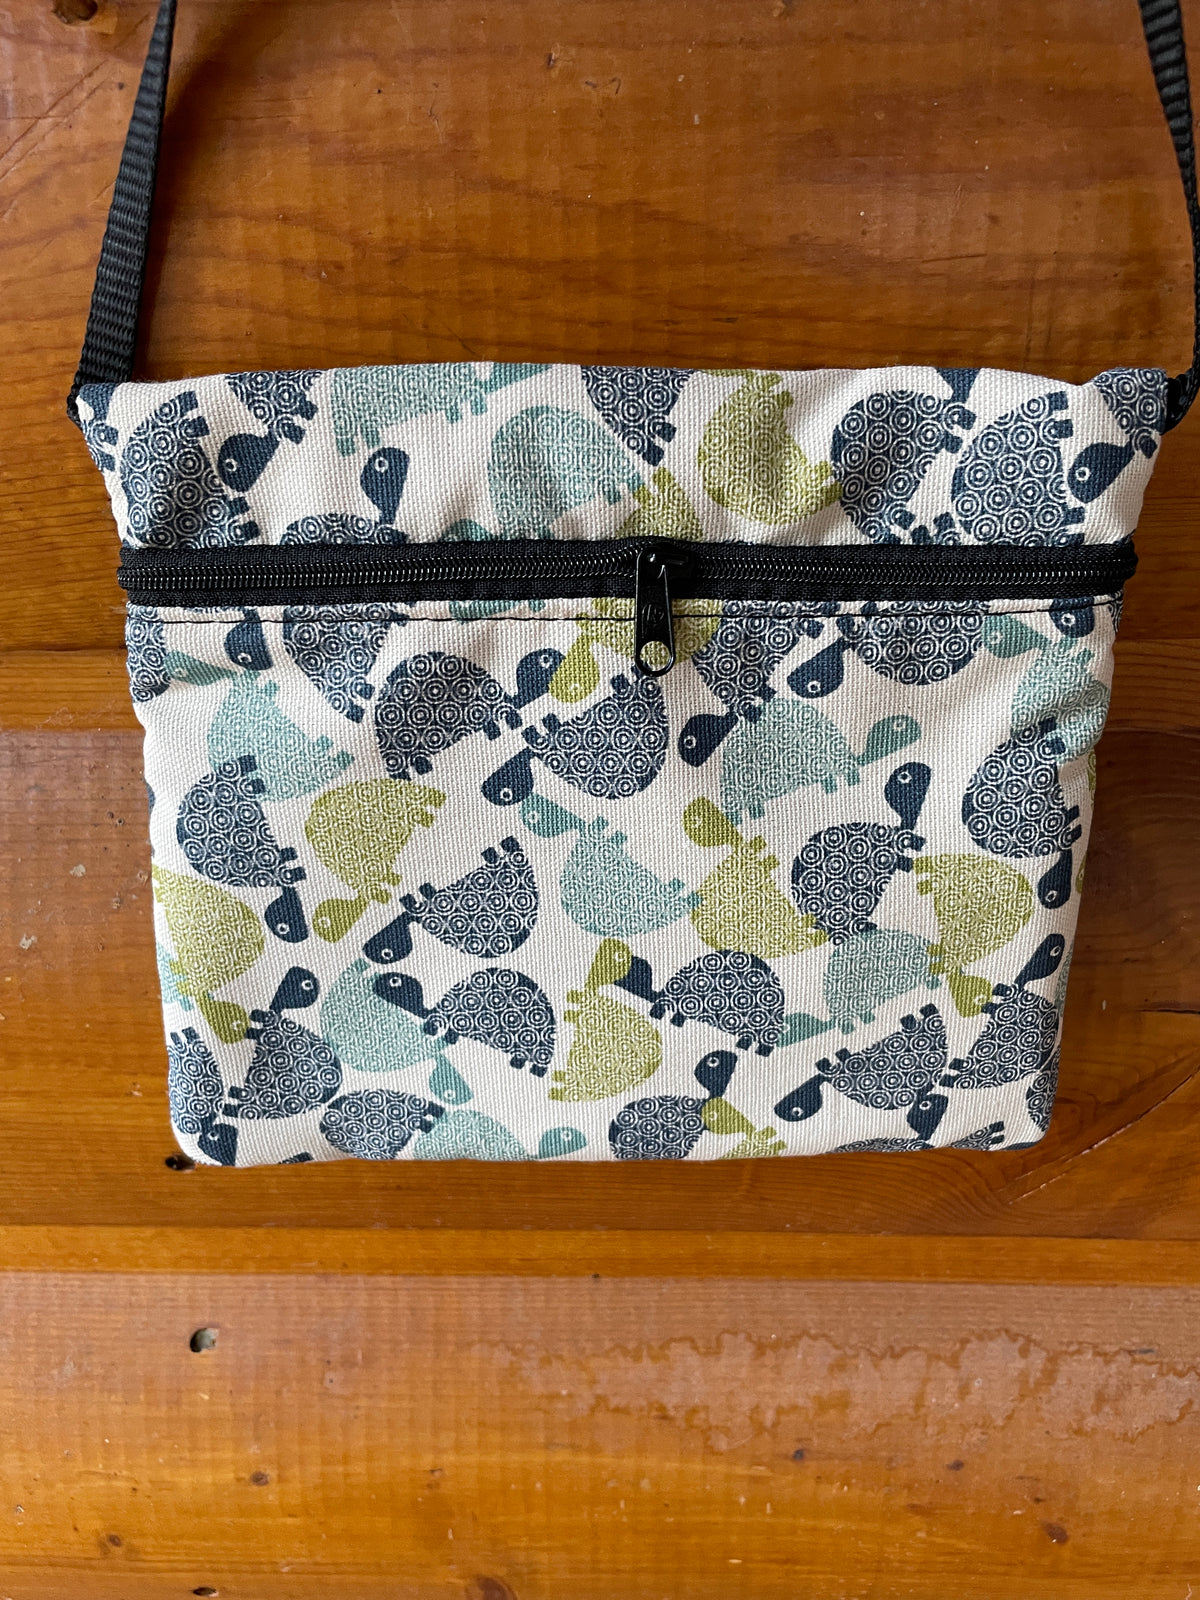 3 Zip Bag Blue- Turtle Blue/Green Turtle Print Fabric